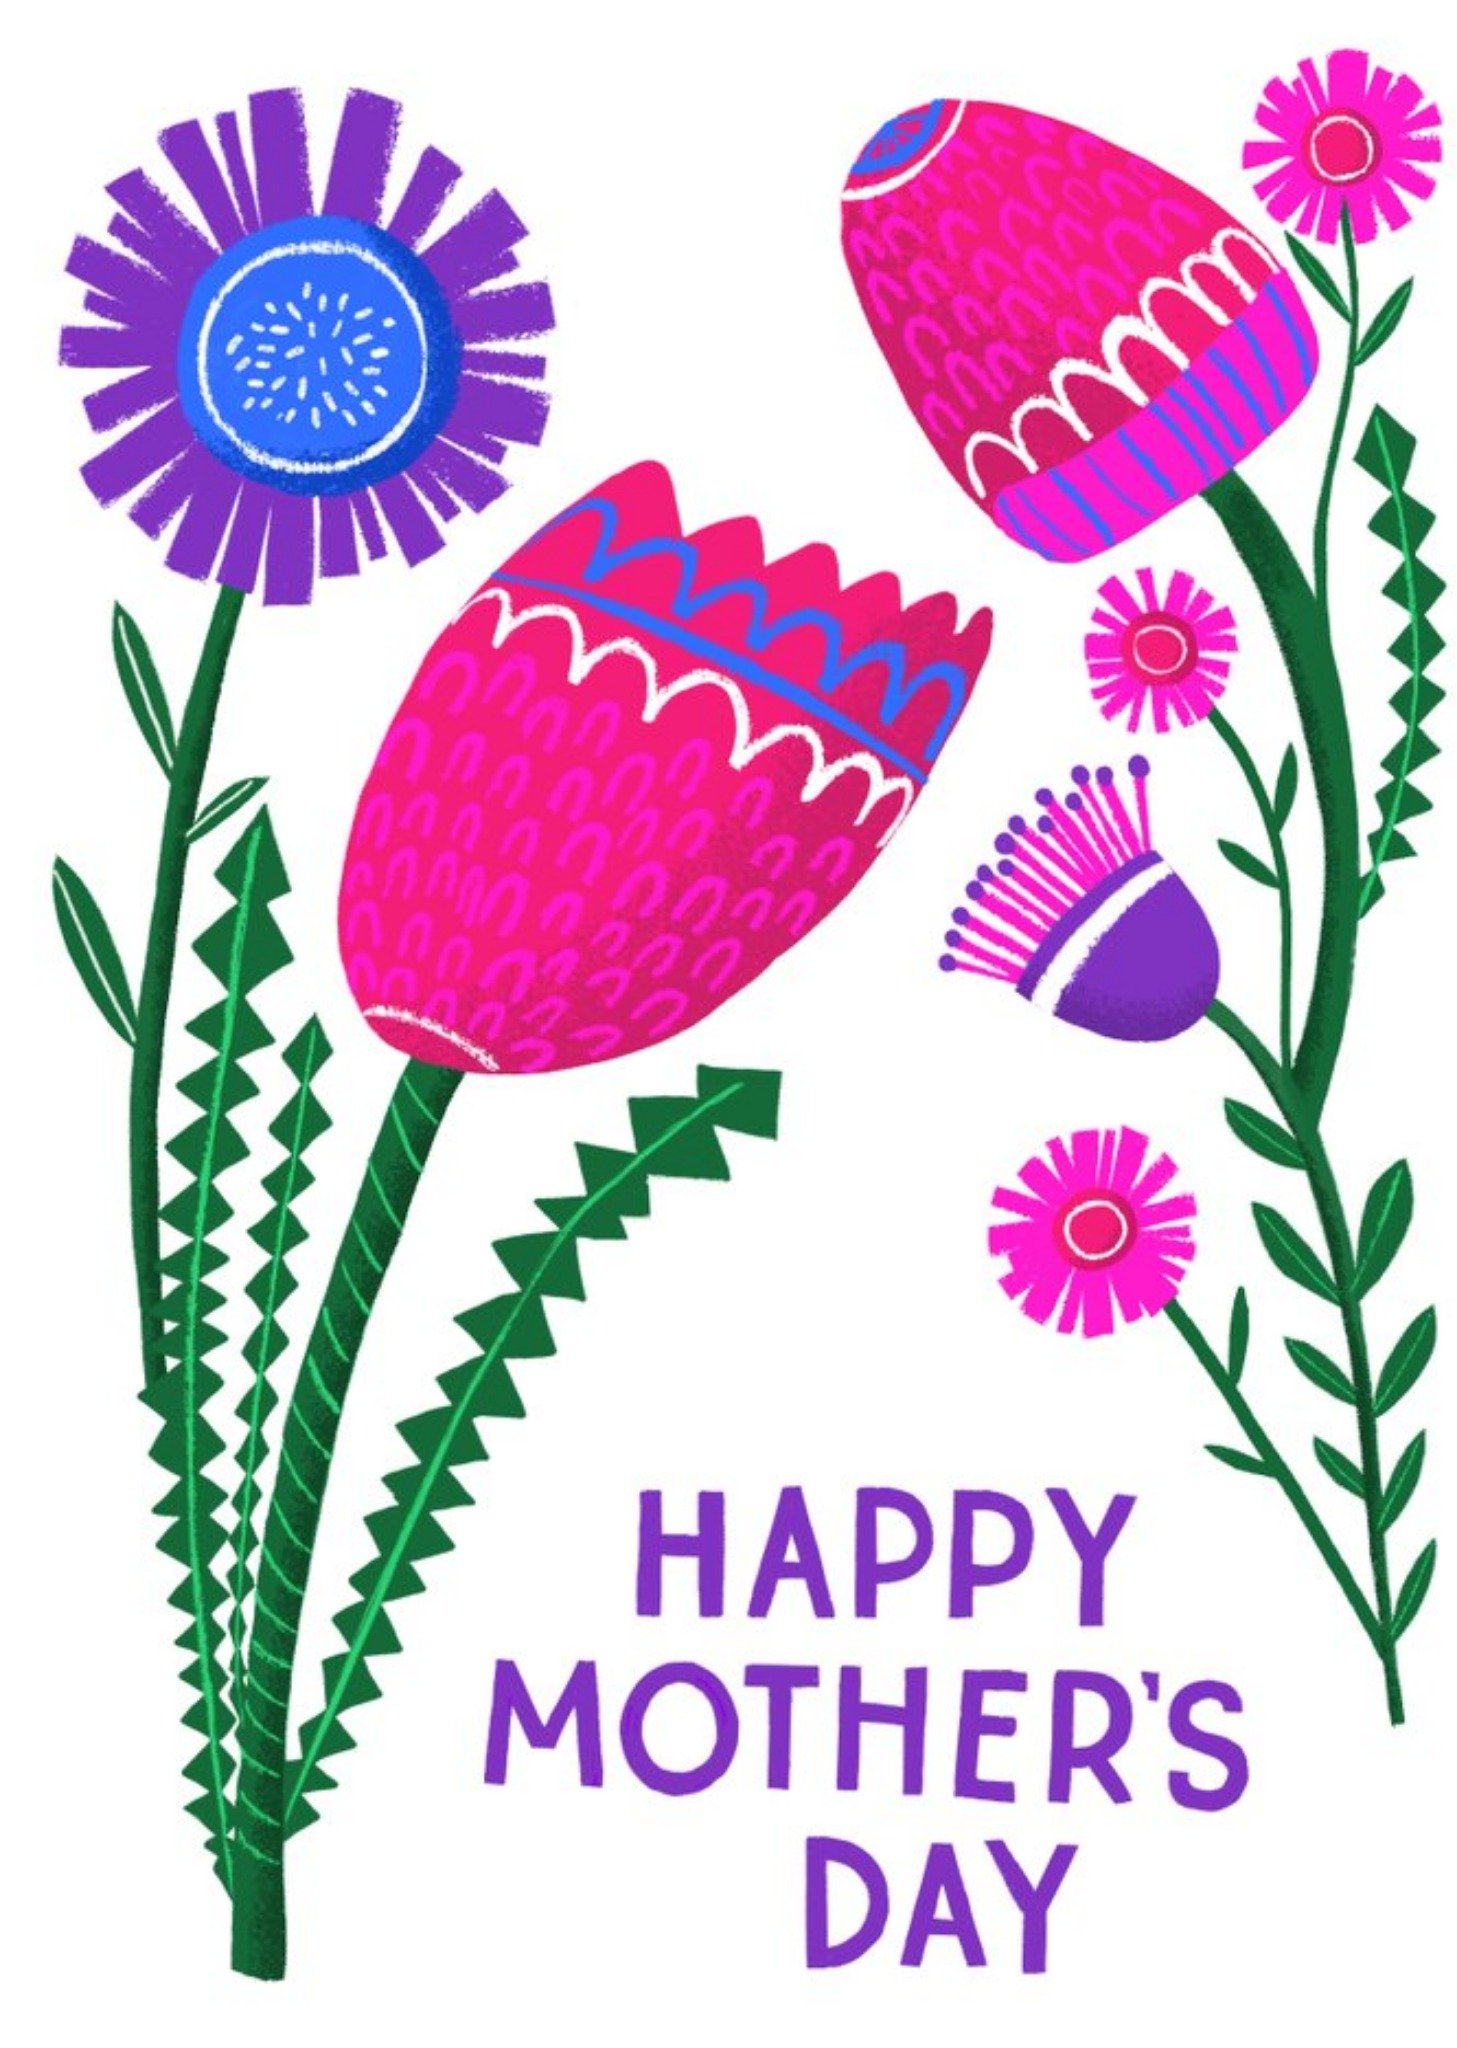 Moonpig Sinead Hanley Illustration Australia Floral Mother's Day Pink Card Ecard